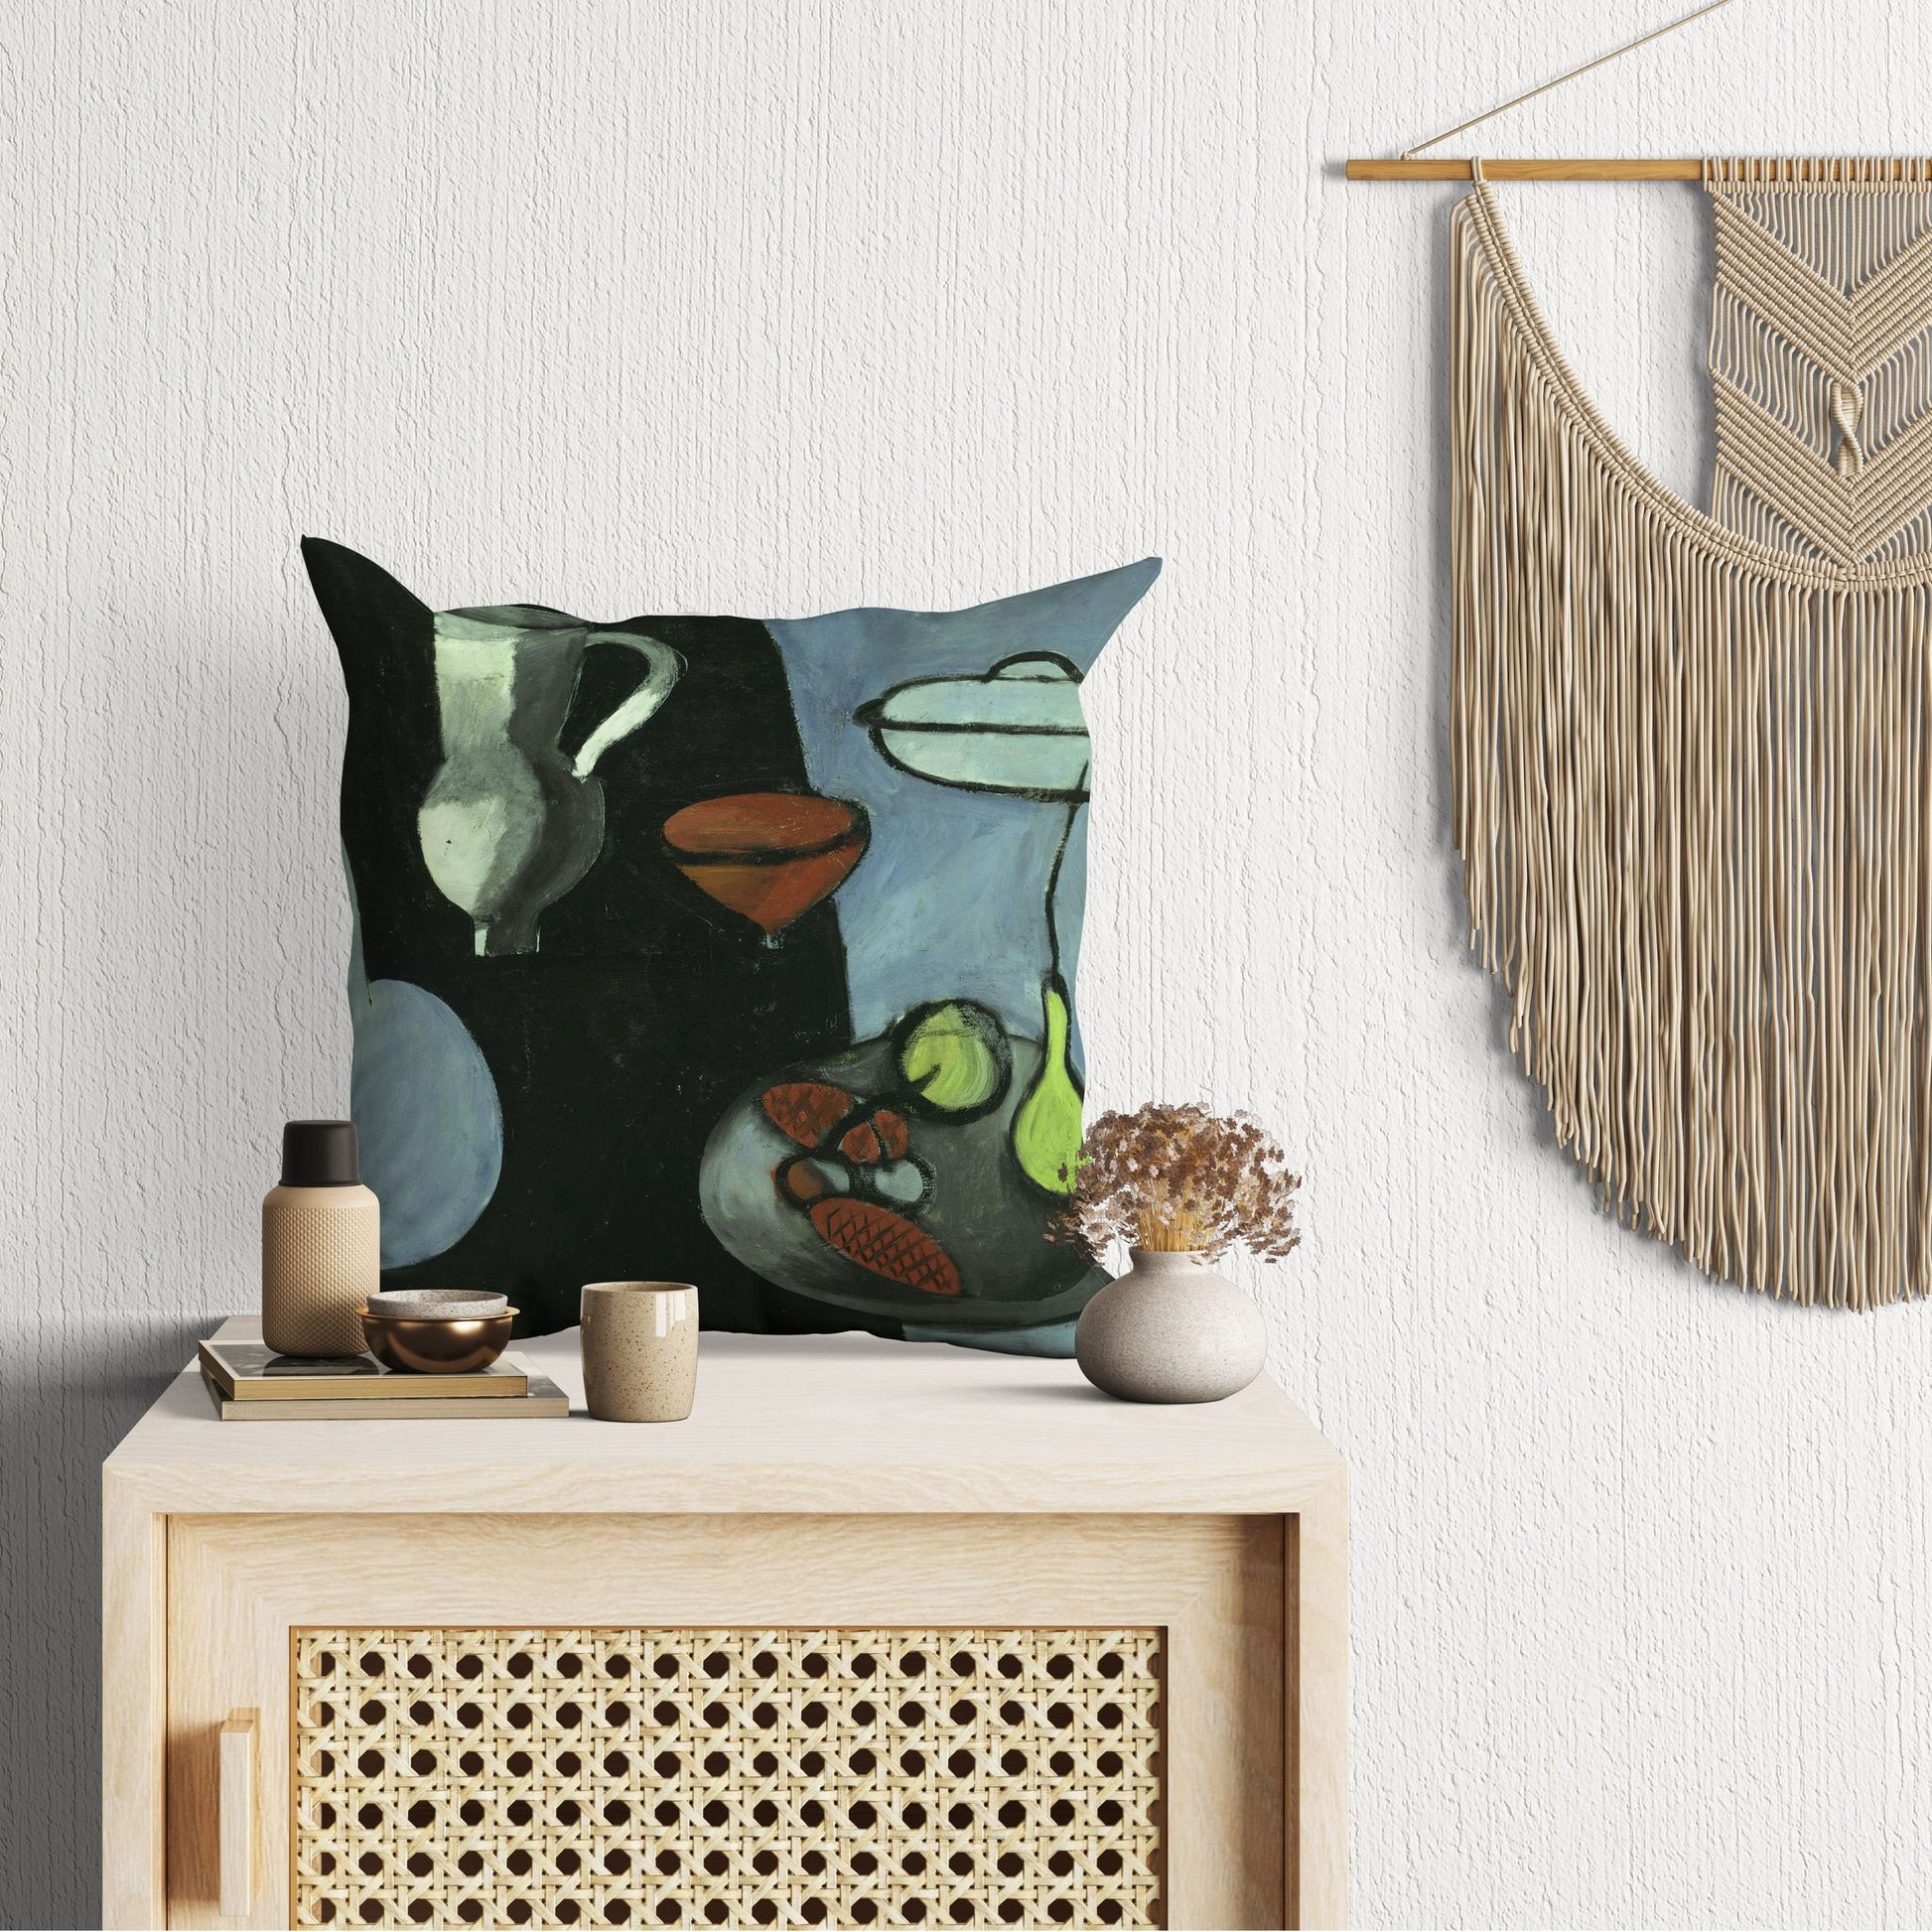 Henri Matisse Famous Art, Tapestry Pillows, Abstract Throw Pillow Cover, Artist Pillow, Square Pillow, Playroom Decor, Sofa Pillows